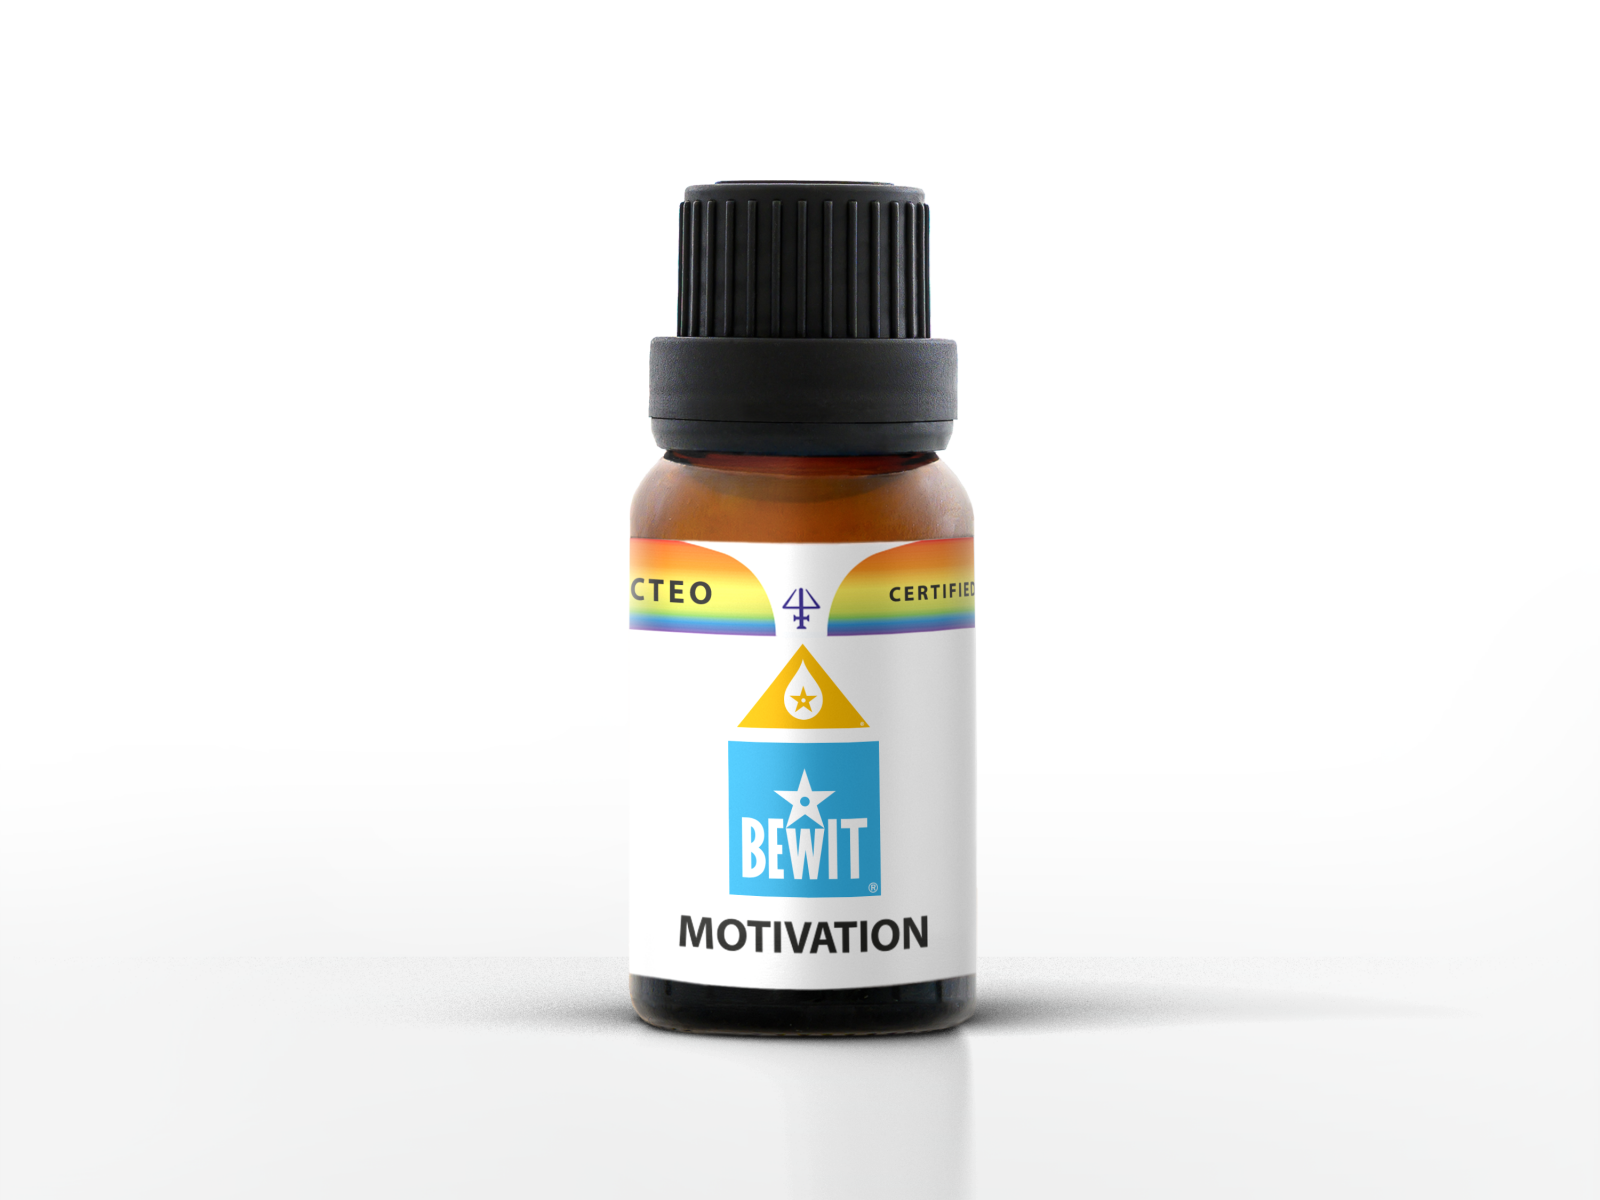 BEWIT MOTIVATION - A blend of essential oils - 1